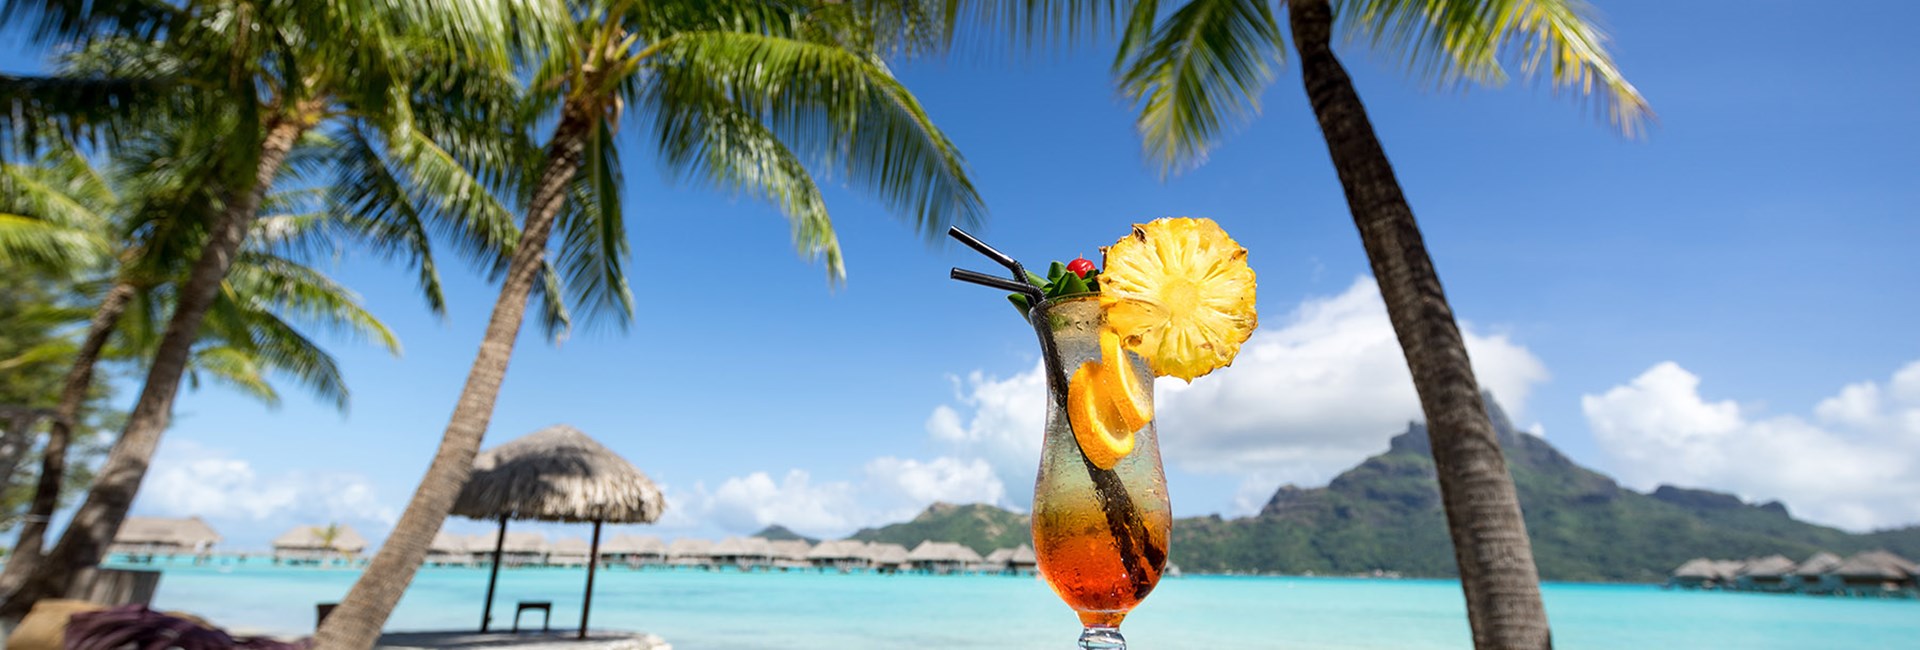 orange cocktail on edge of pool next to beach with palm trees